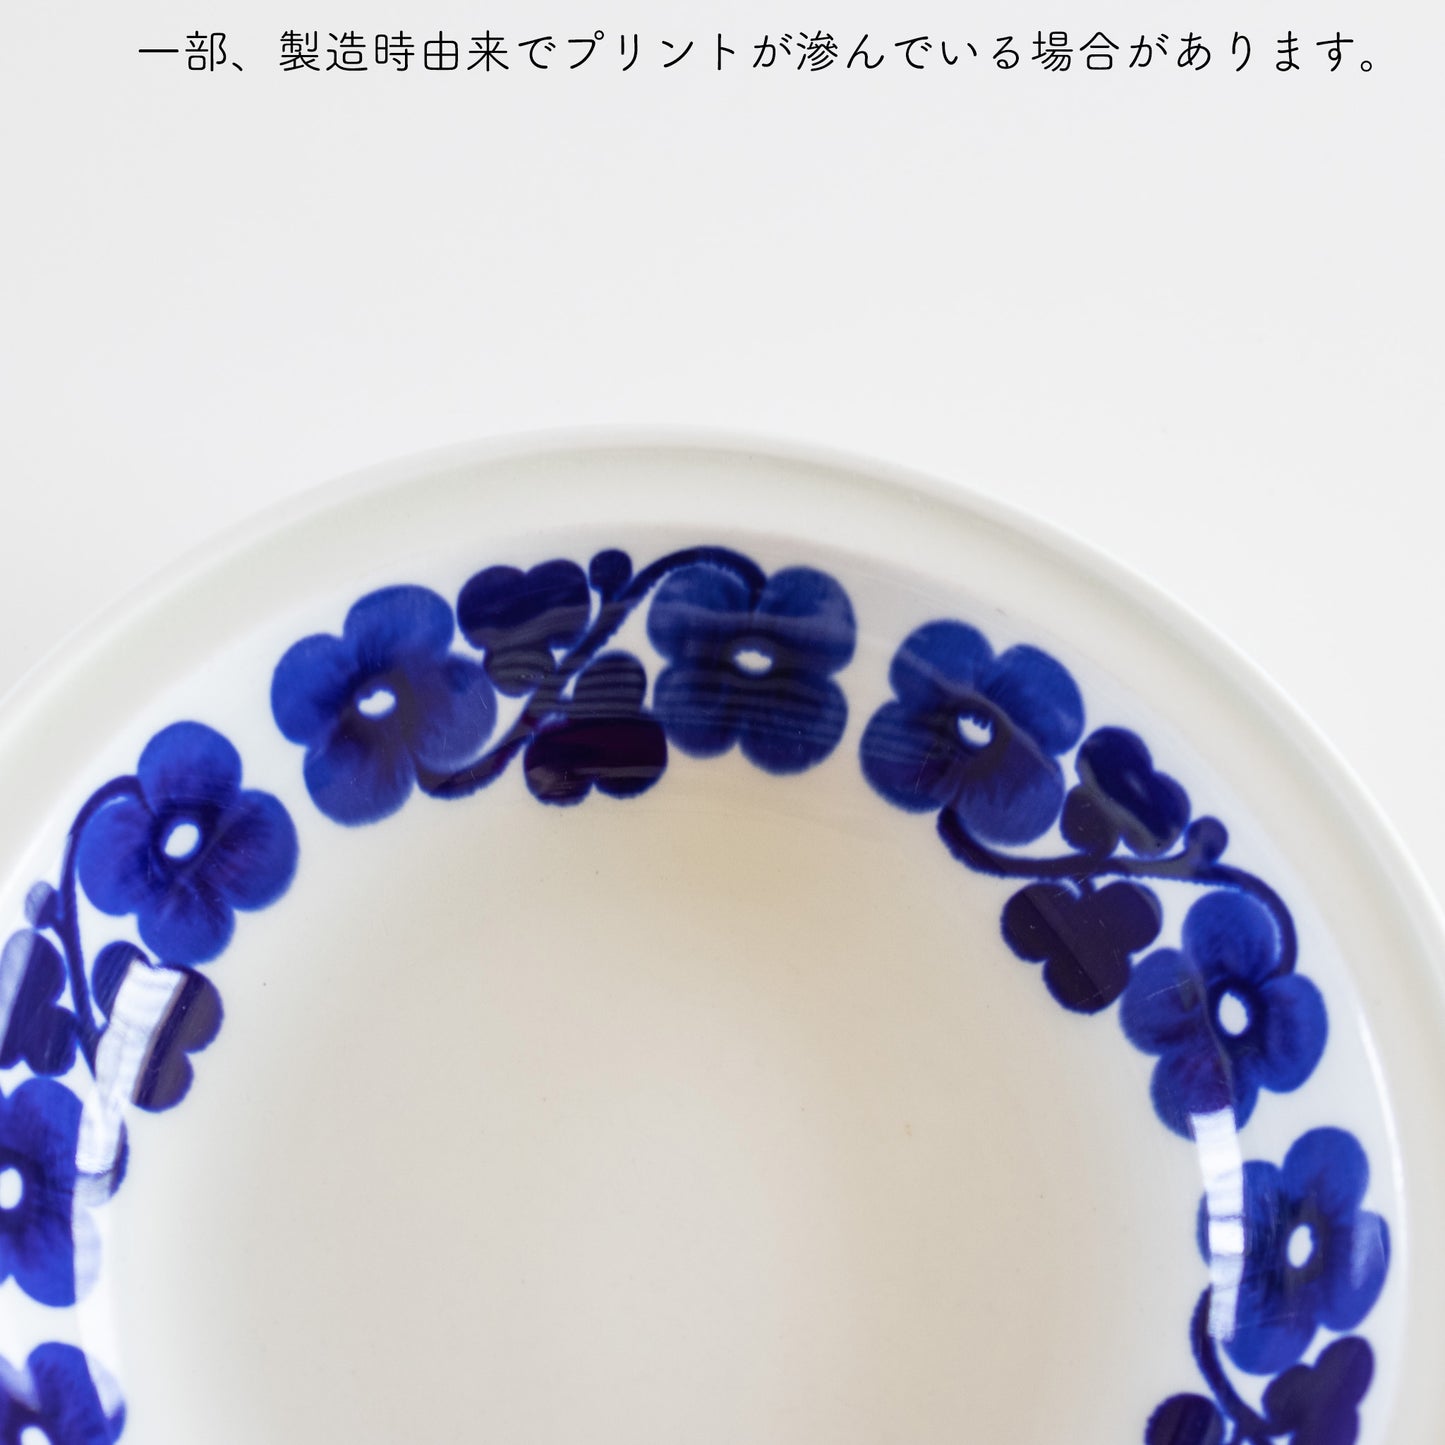 aamu (アアム) bowl 19.0cm / arabia (アラビア)